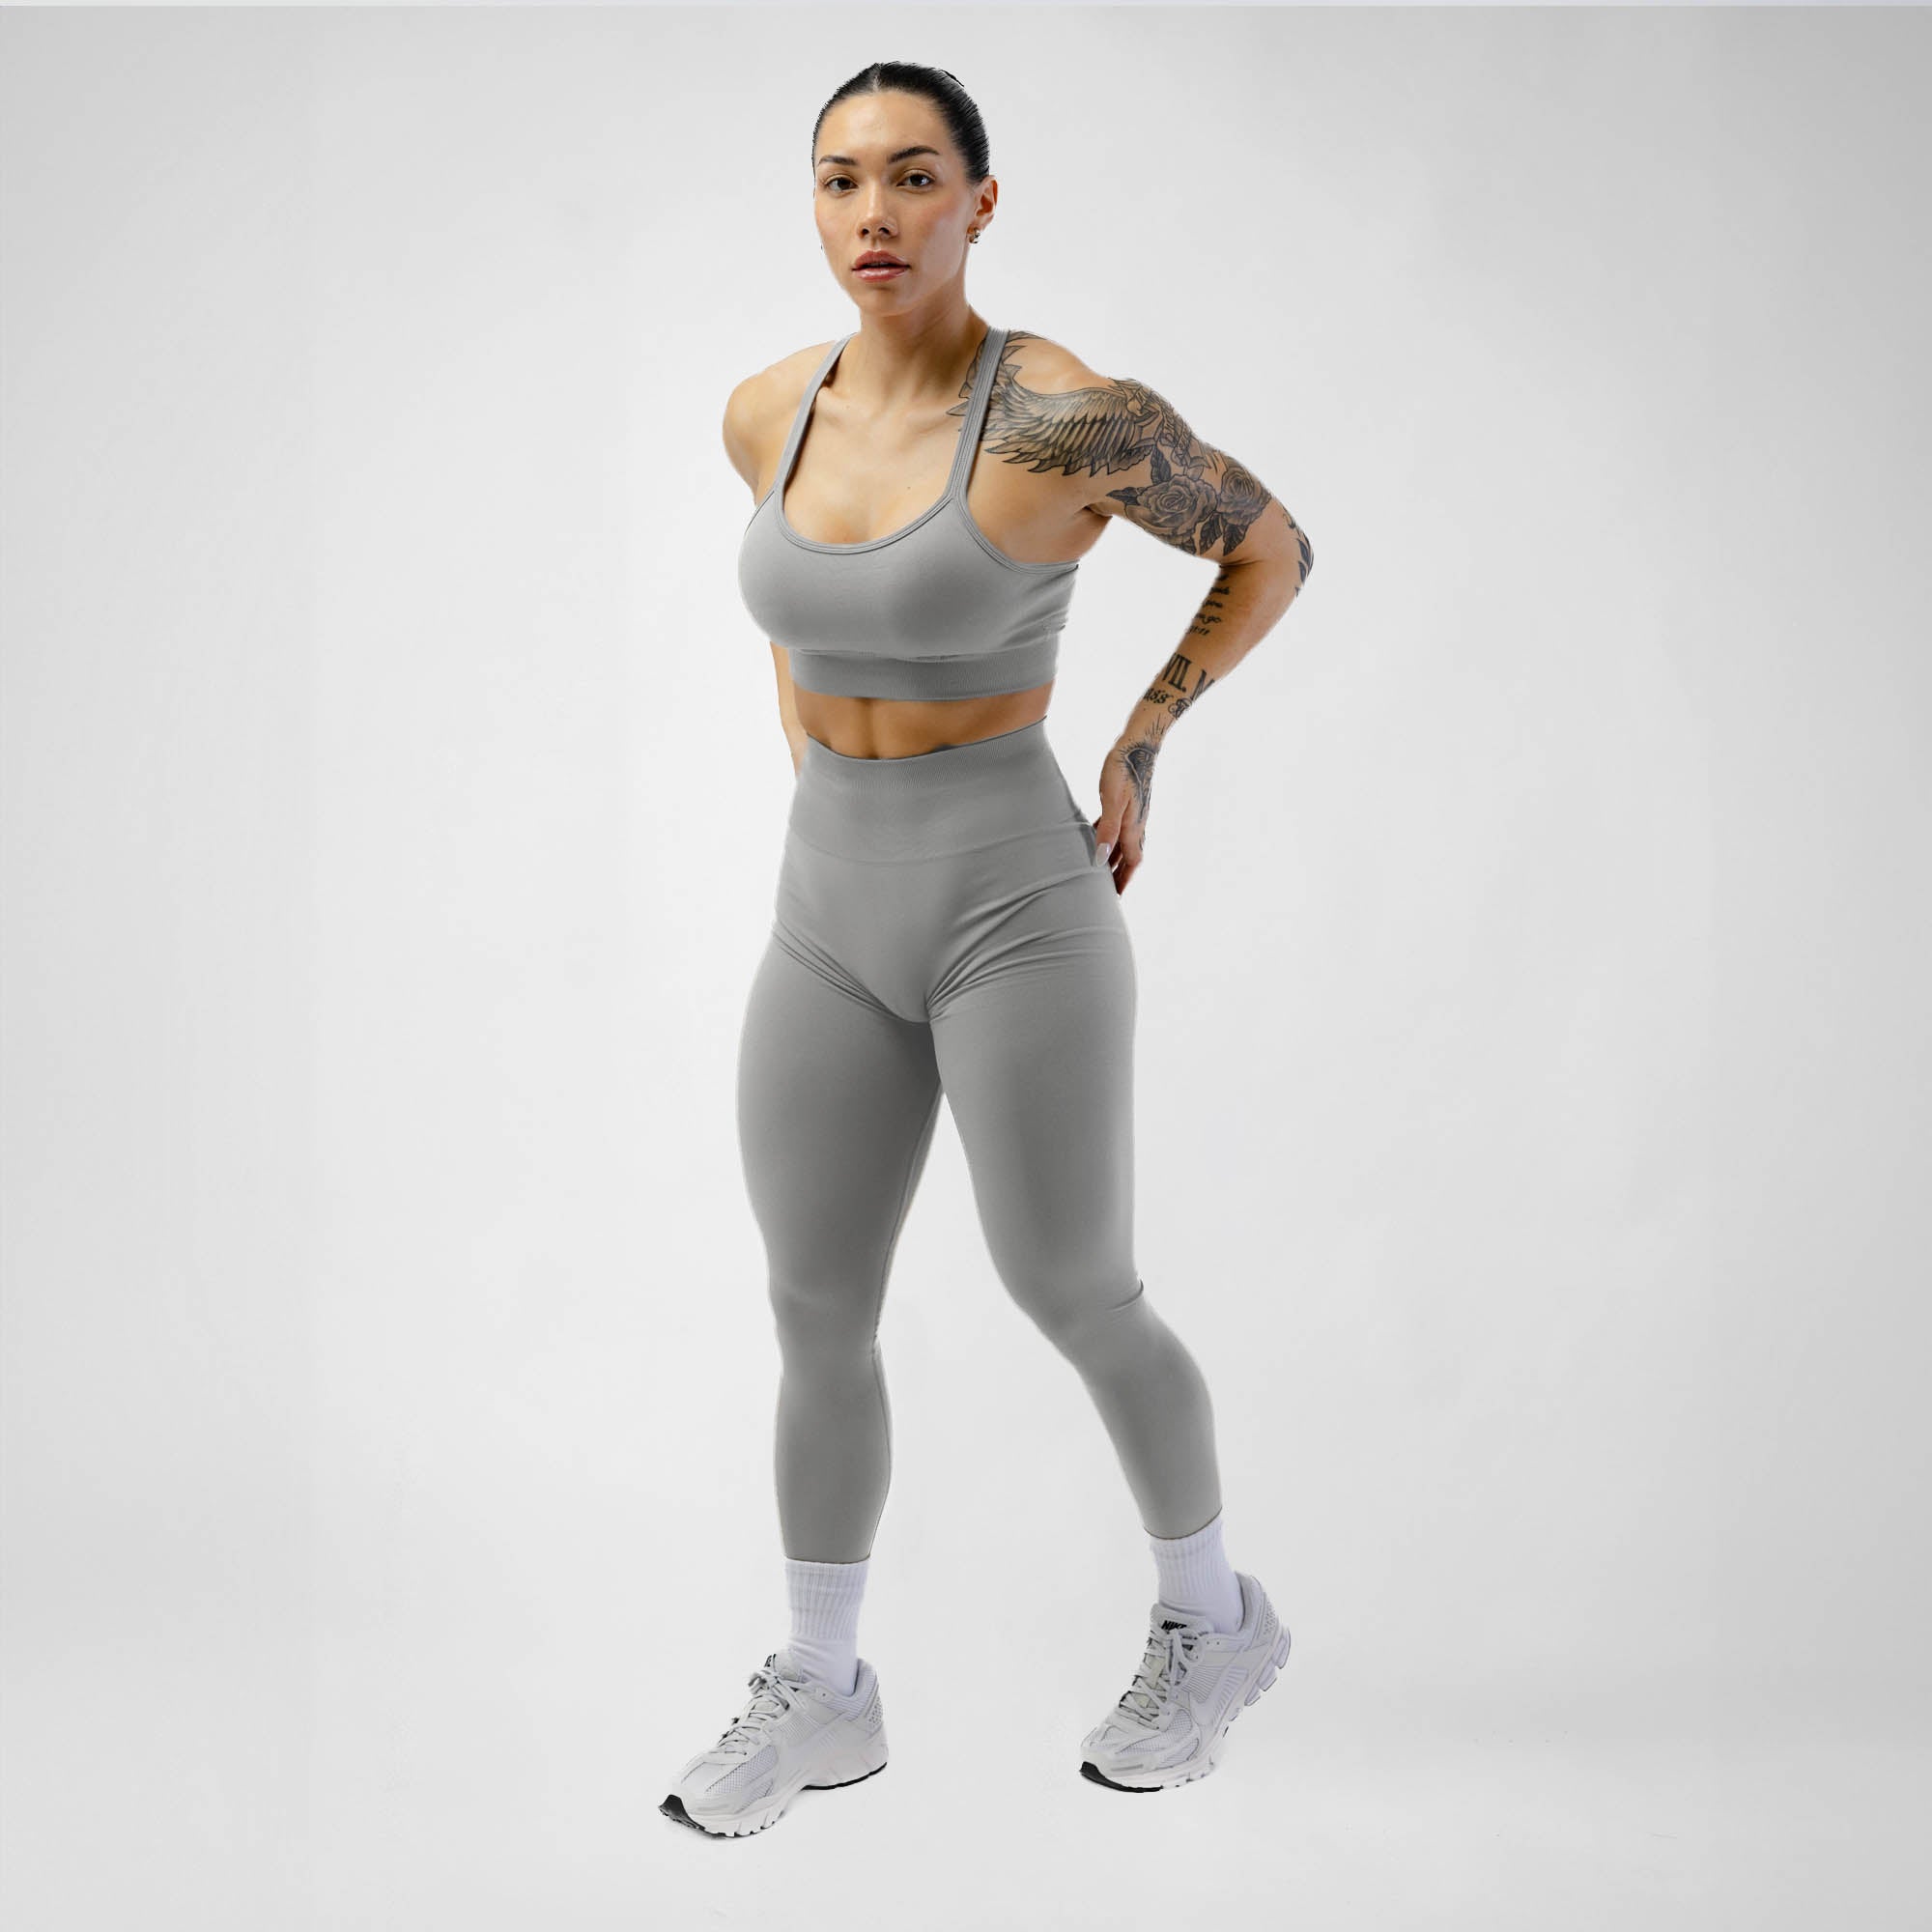 Ryderwear Camo Tights.Shop Australian compression gym apparel